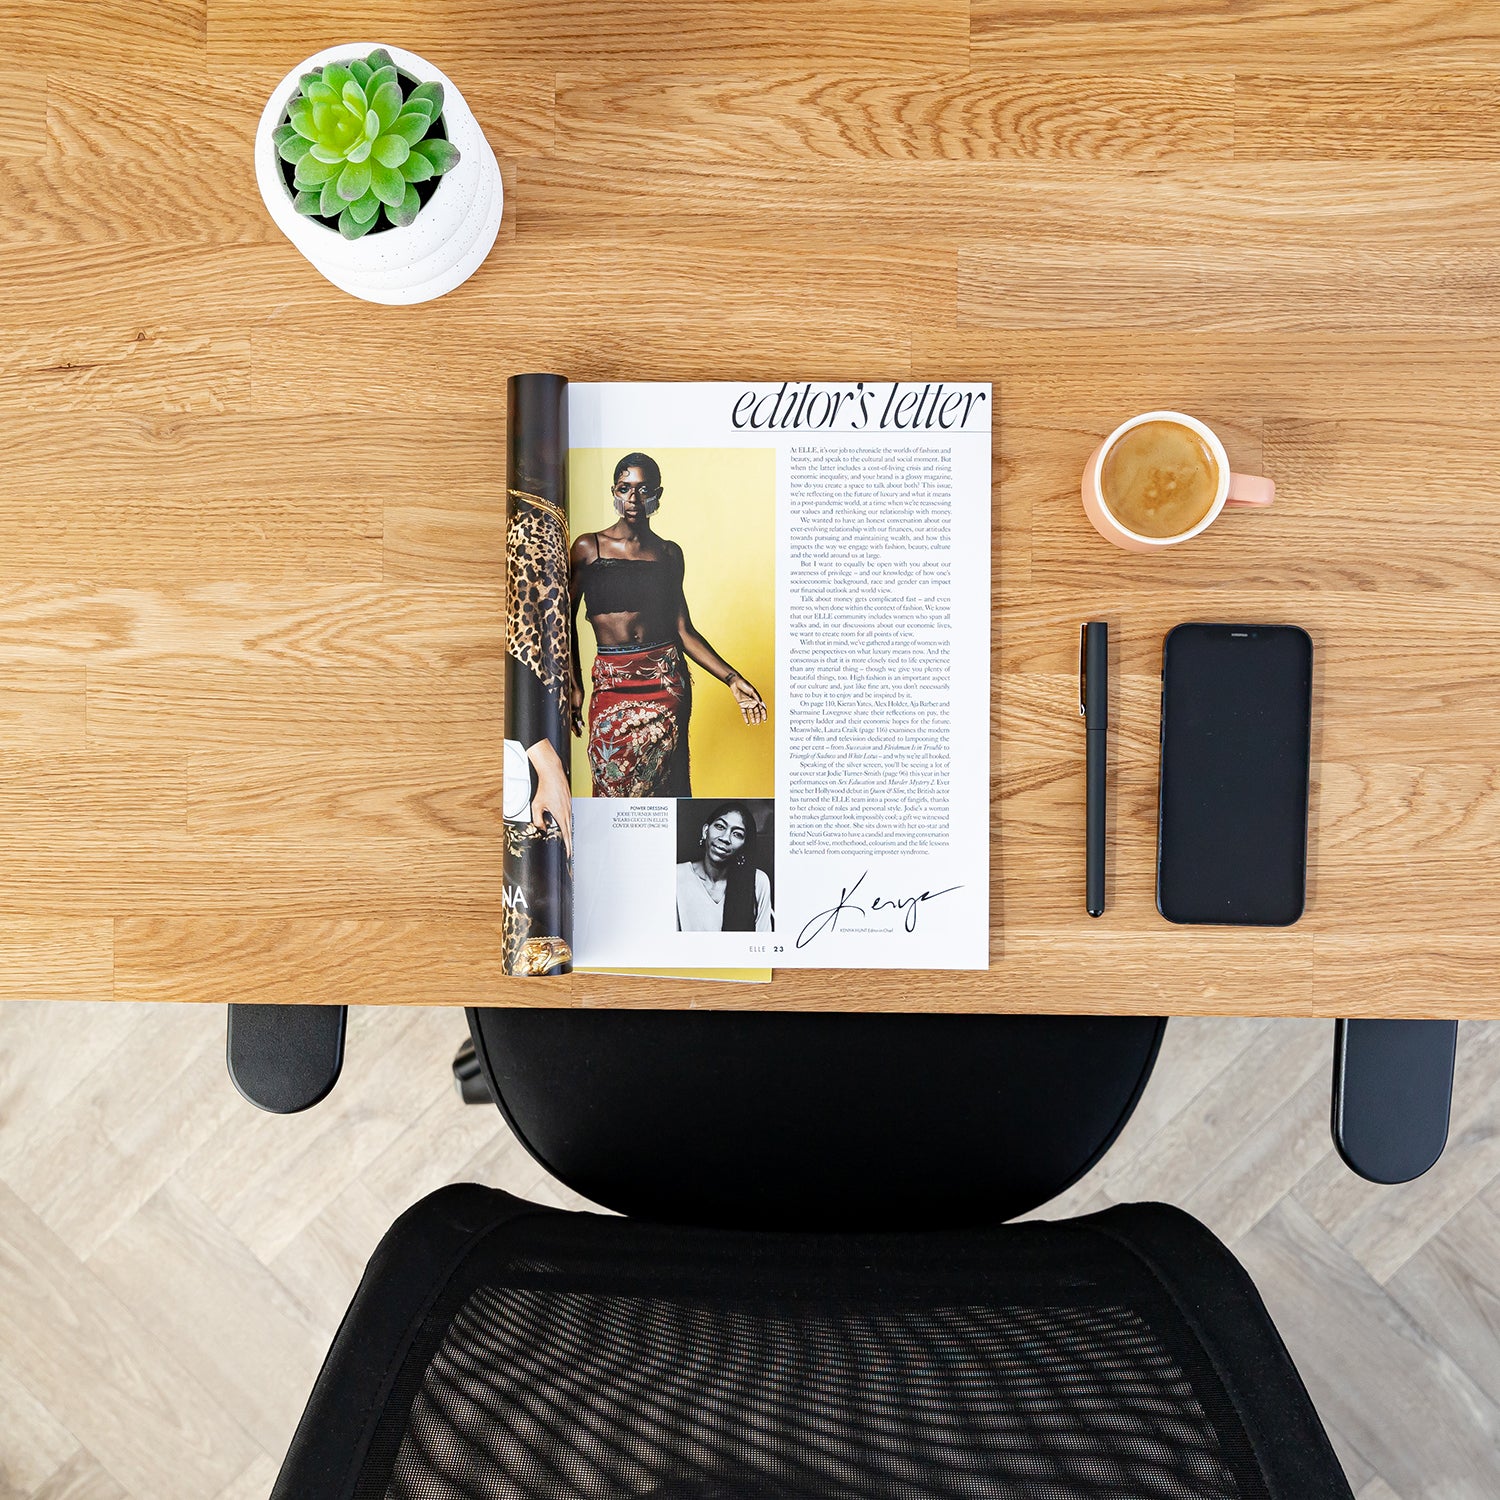 Oak Solid Wood Desk with Black Hairpin Legs - 27mm thick desktop